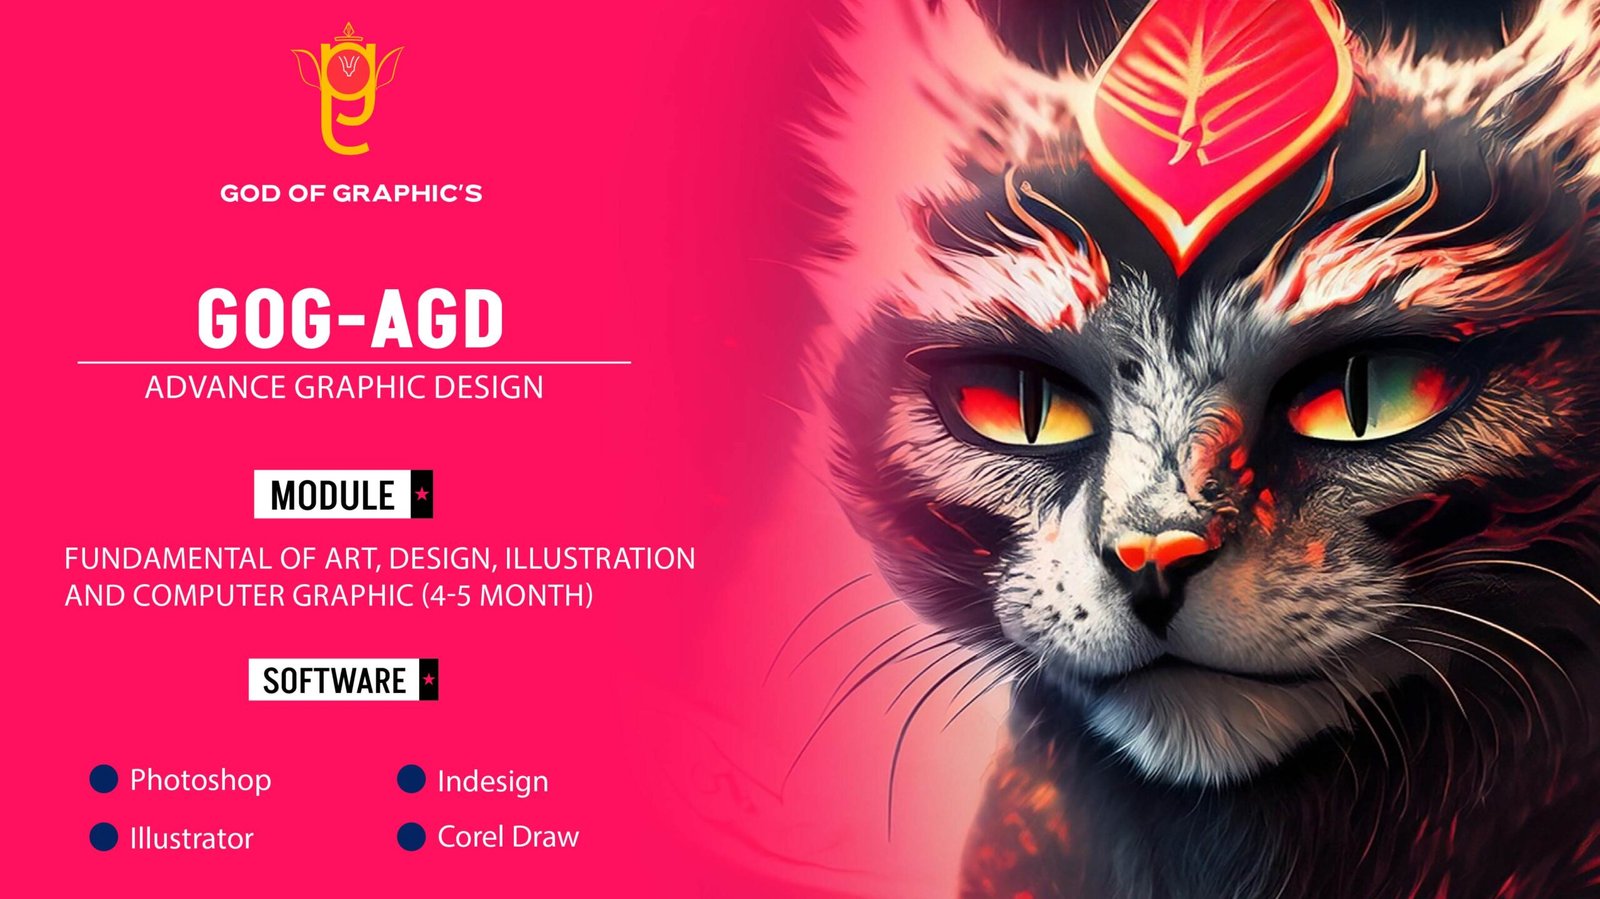 Comprehensive Graphic Design Course: Master Photoshop, Illustrator & Digital Art